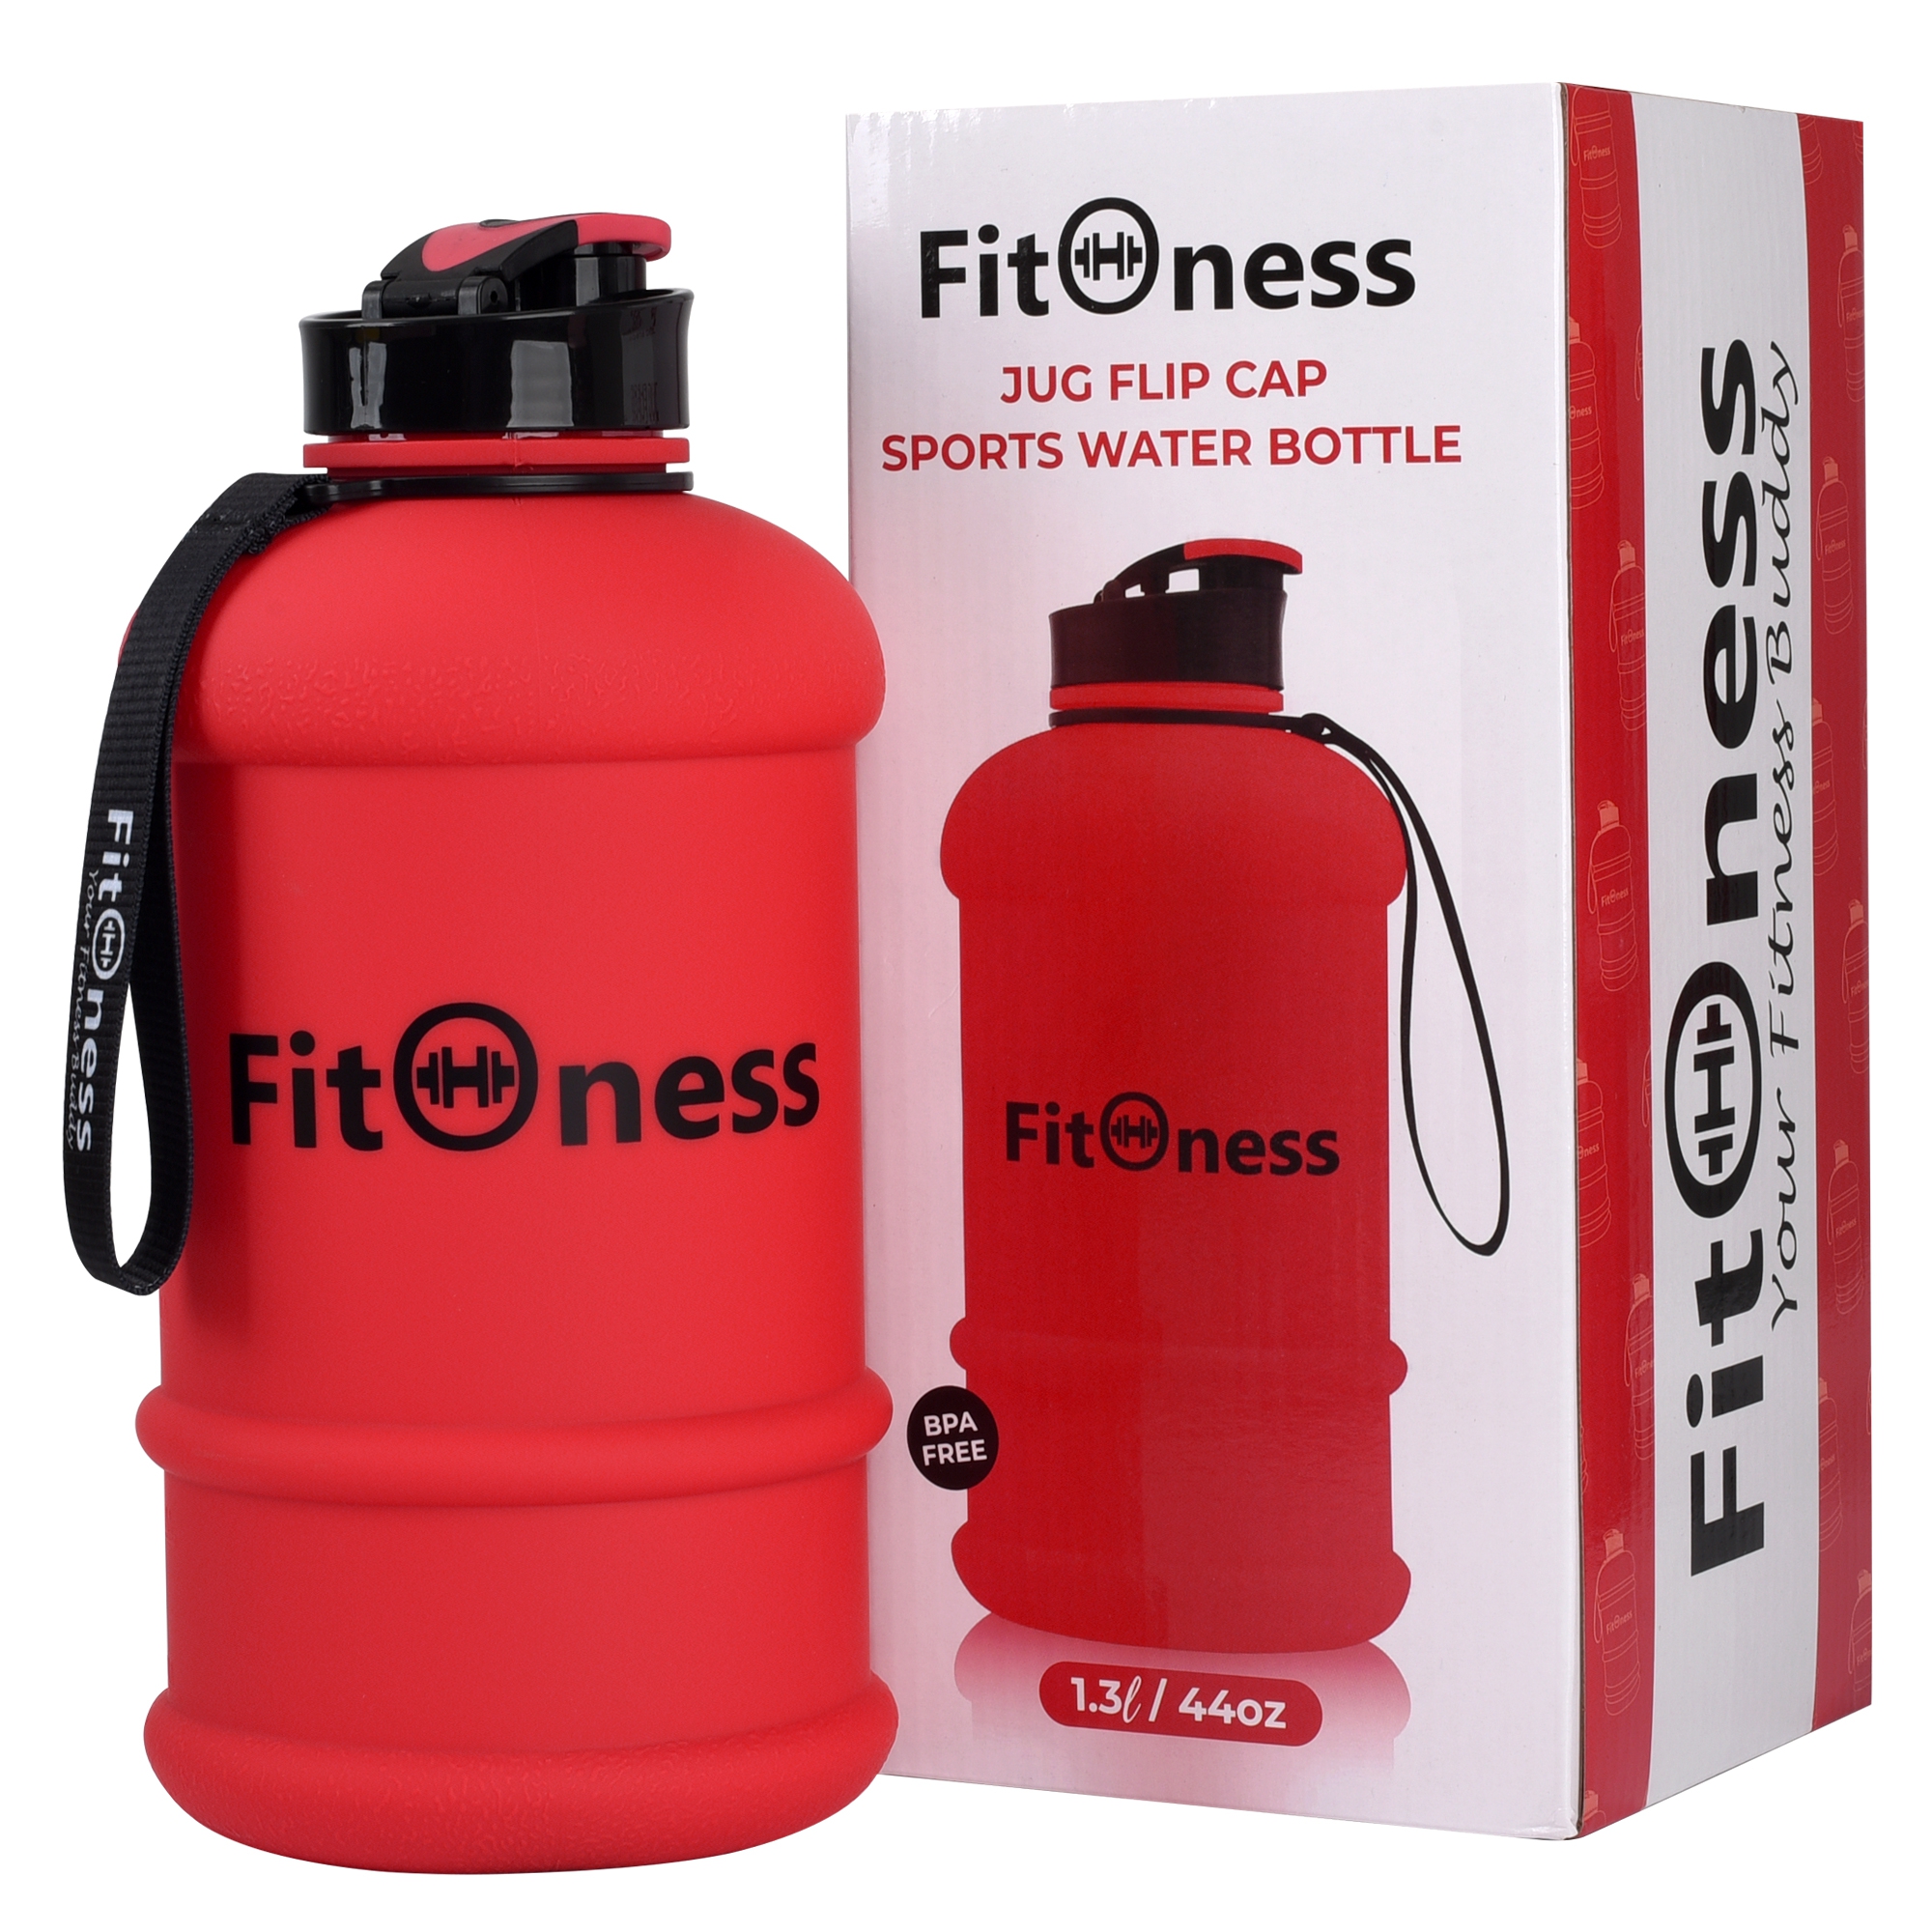 Brand Fitoness Jug Bottle 1.3l / 44oz Red Sports